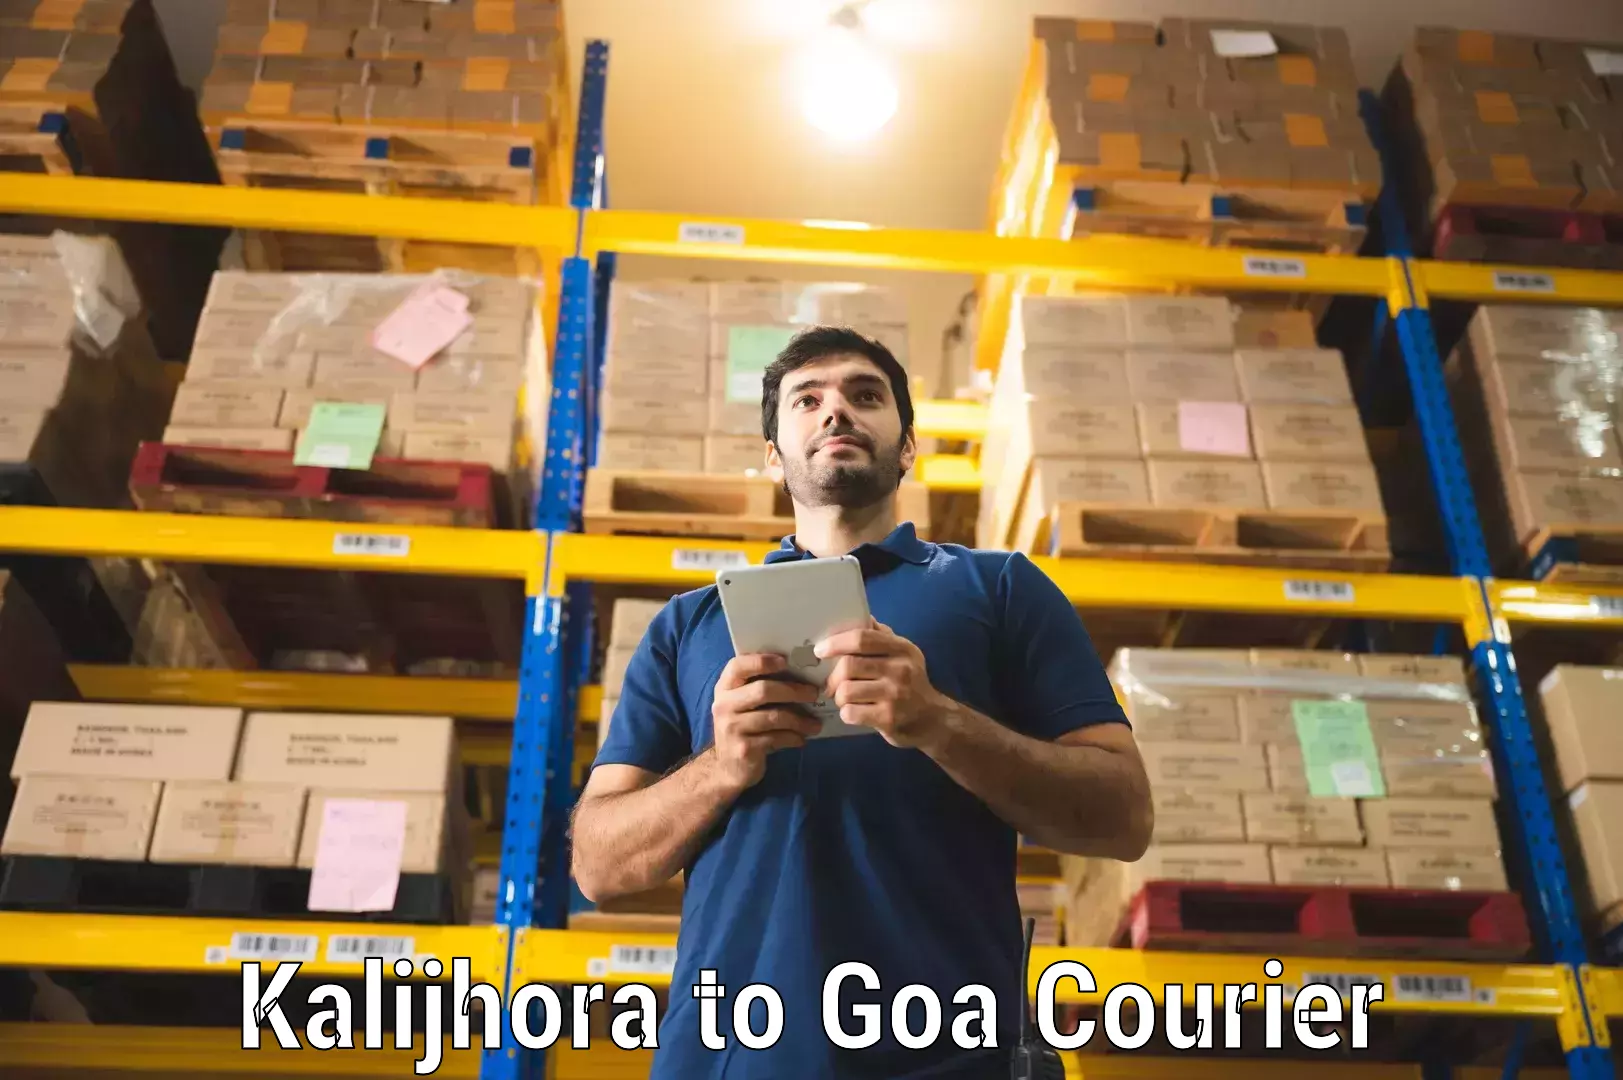 Global shipping networks Kalijhora to Goa